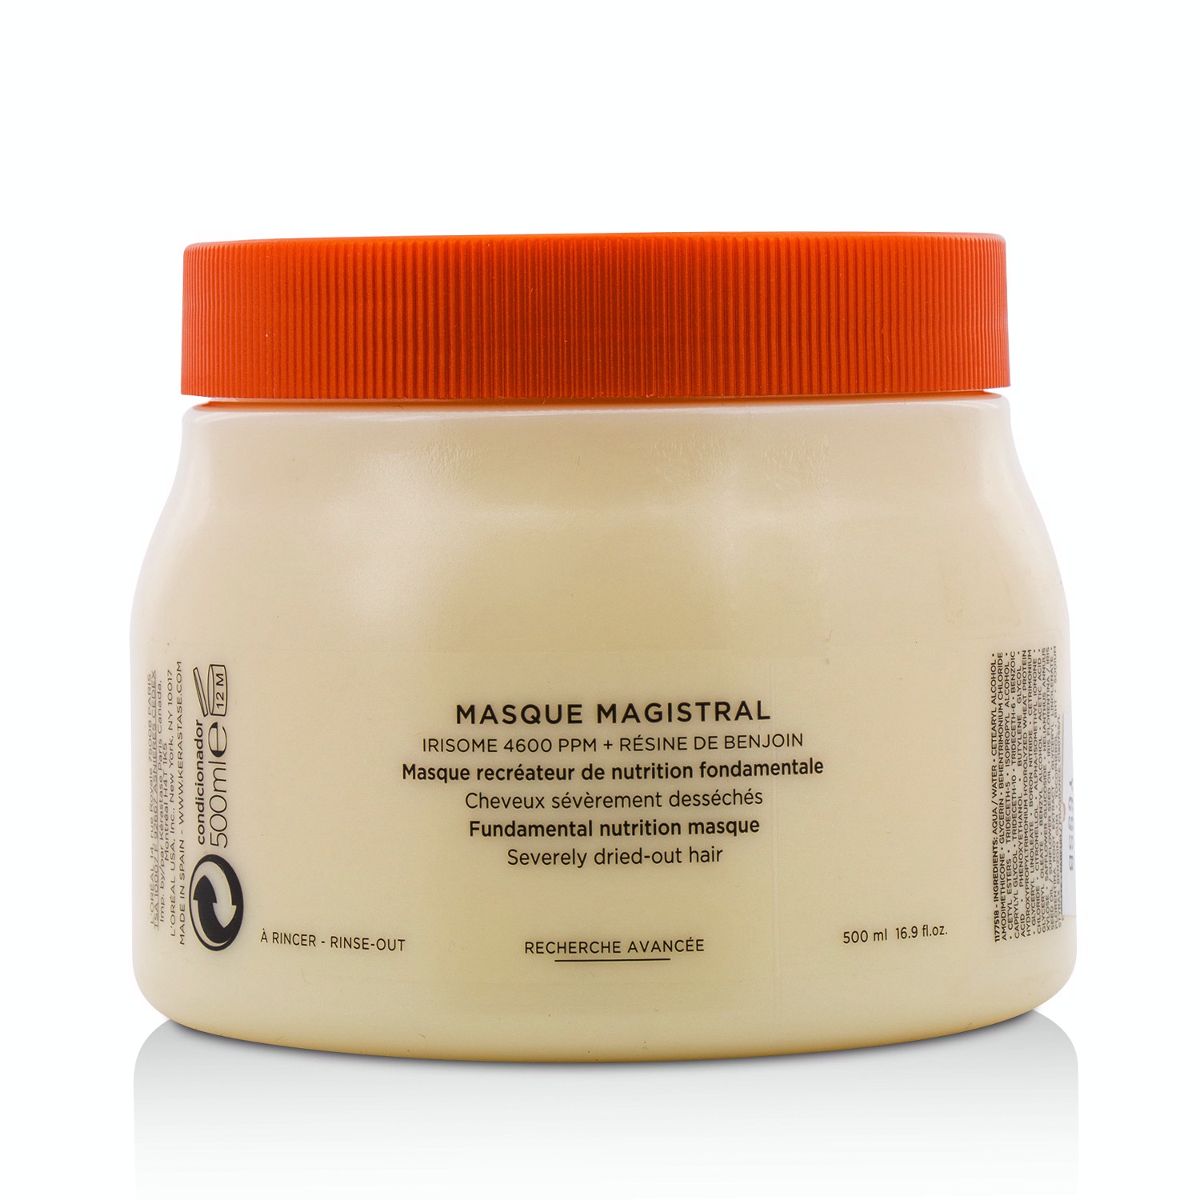 Nutritive Magistral Fundamental Nutrition Masque Dried-Out Hair) Kerastase @ Perfume Emporium Hair Care